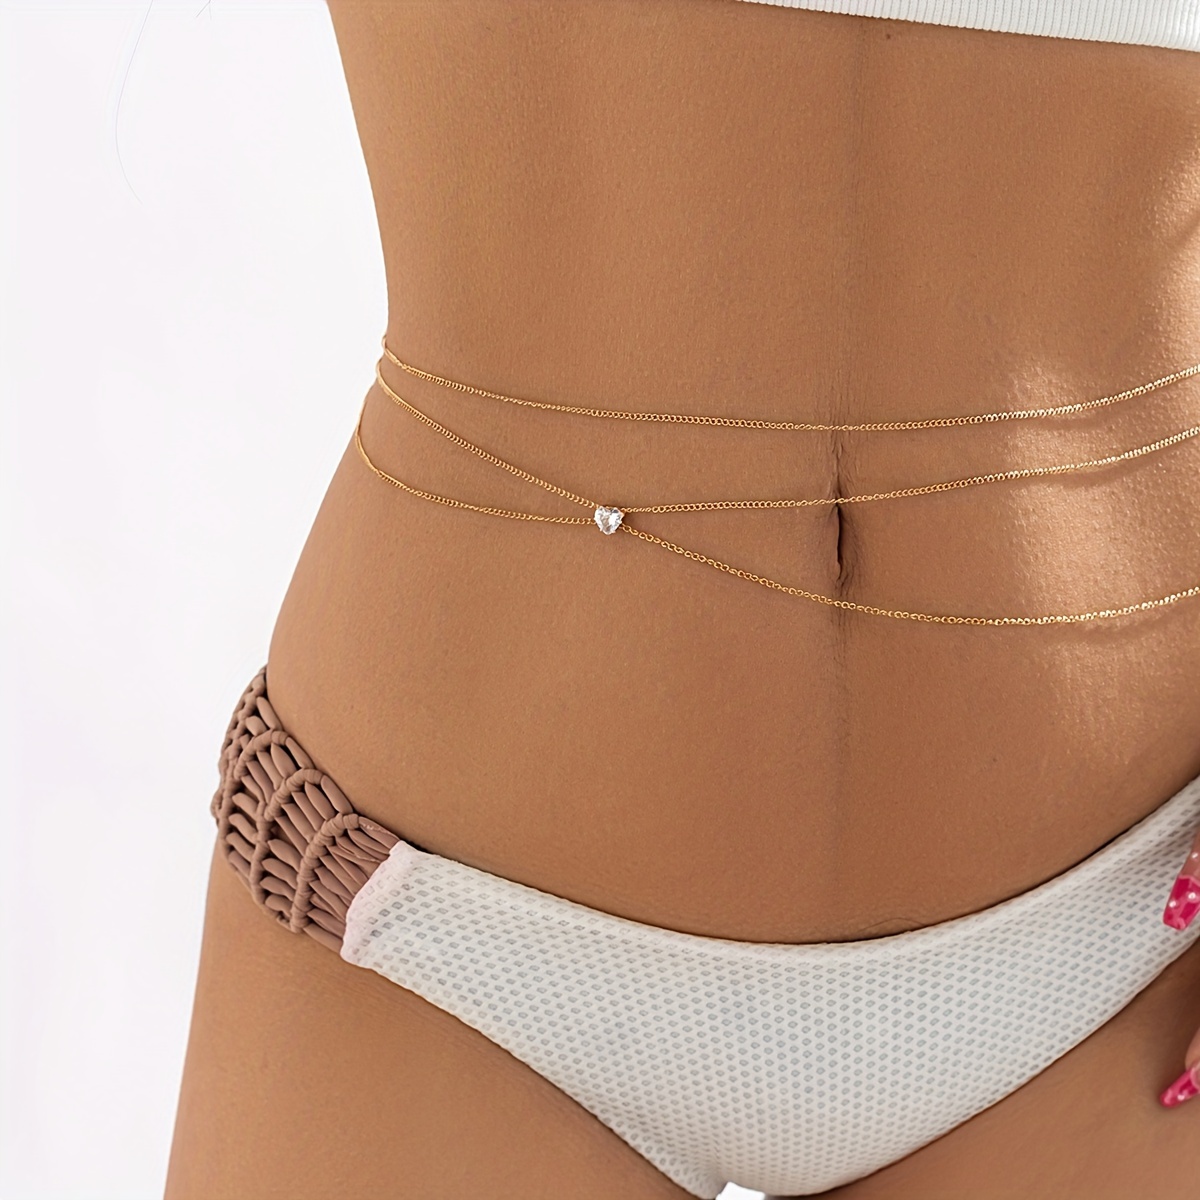 Bikini Waist Chain Thong, Chain Belt Underwear